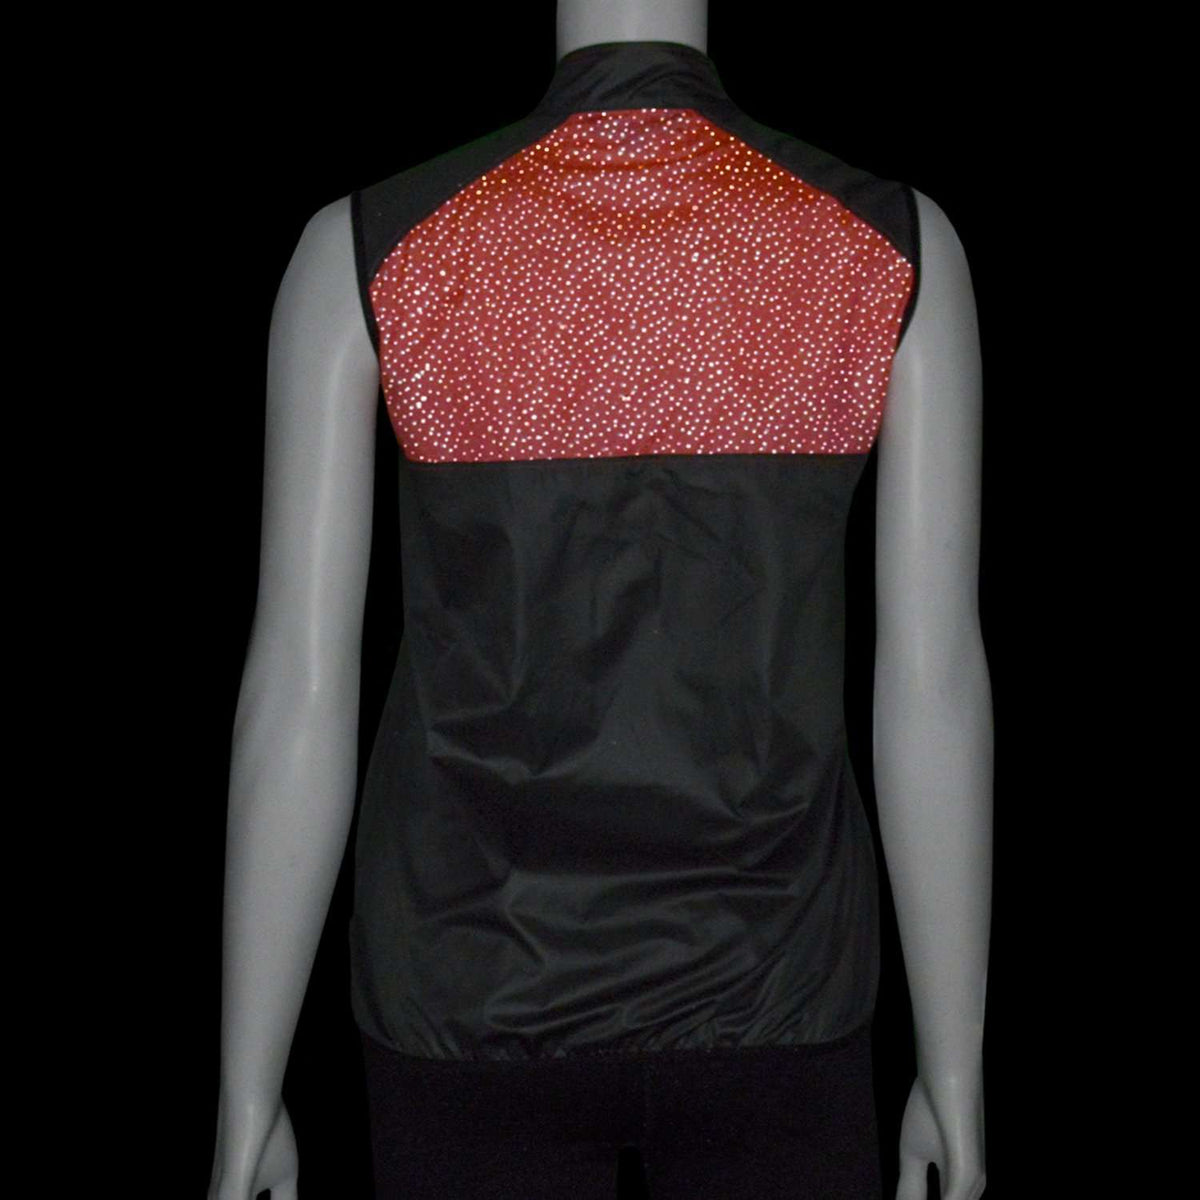 Venture Packable Women's Reflective Vest in Graphite / Coral Glo